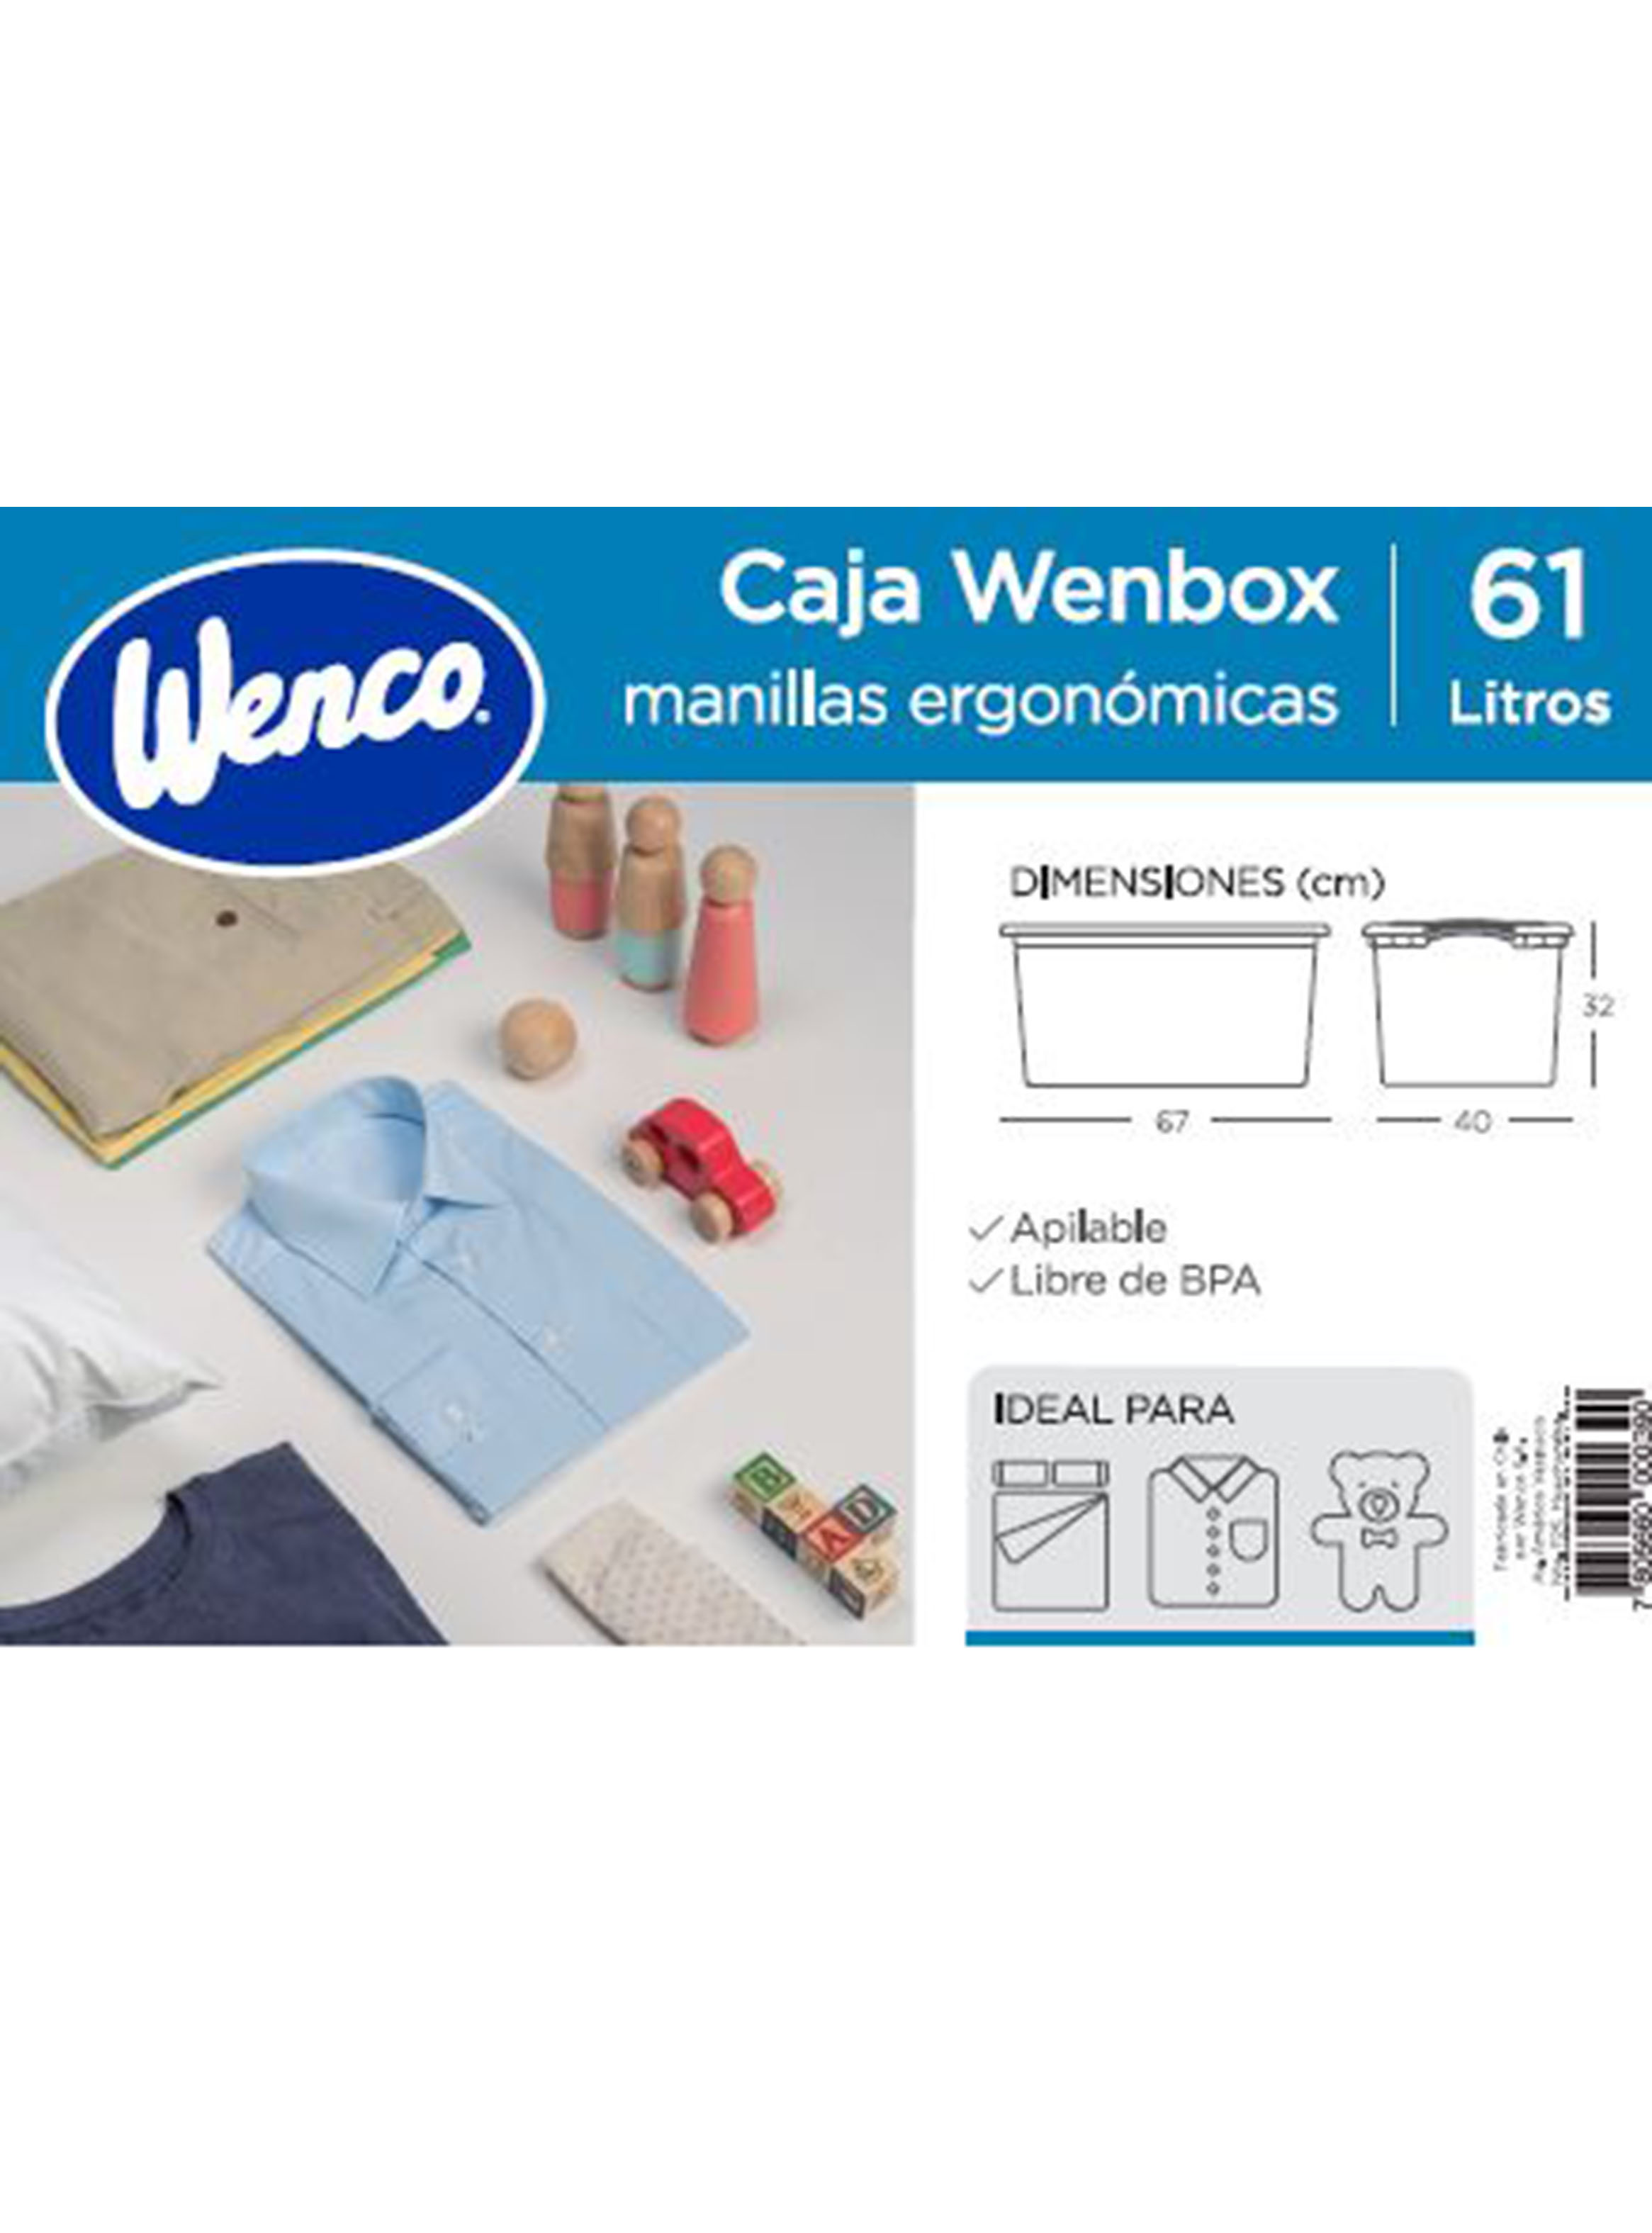 Organizador Wenbox 61 lts Wenco - Organización Dormitorio